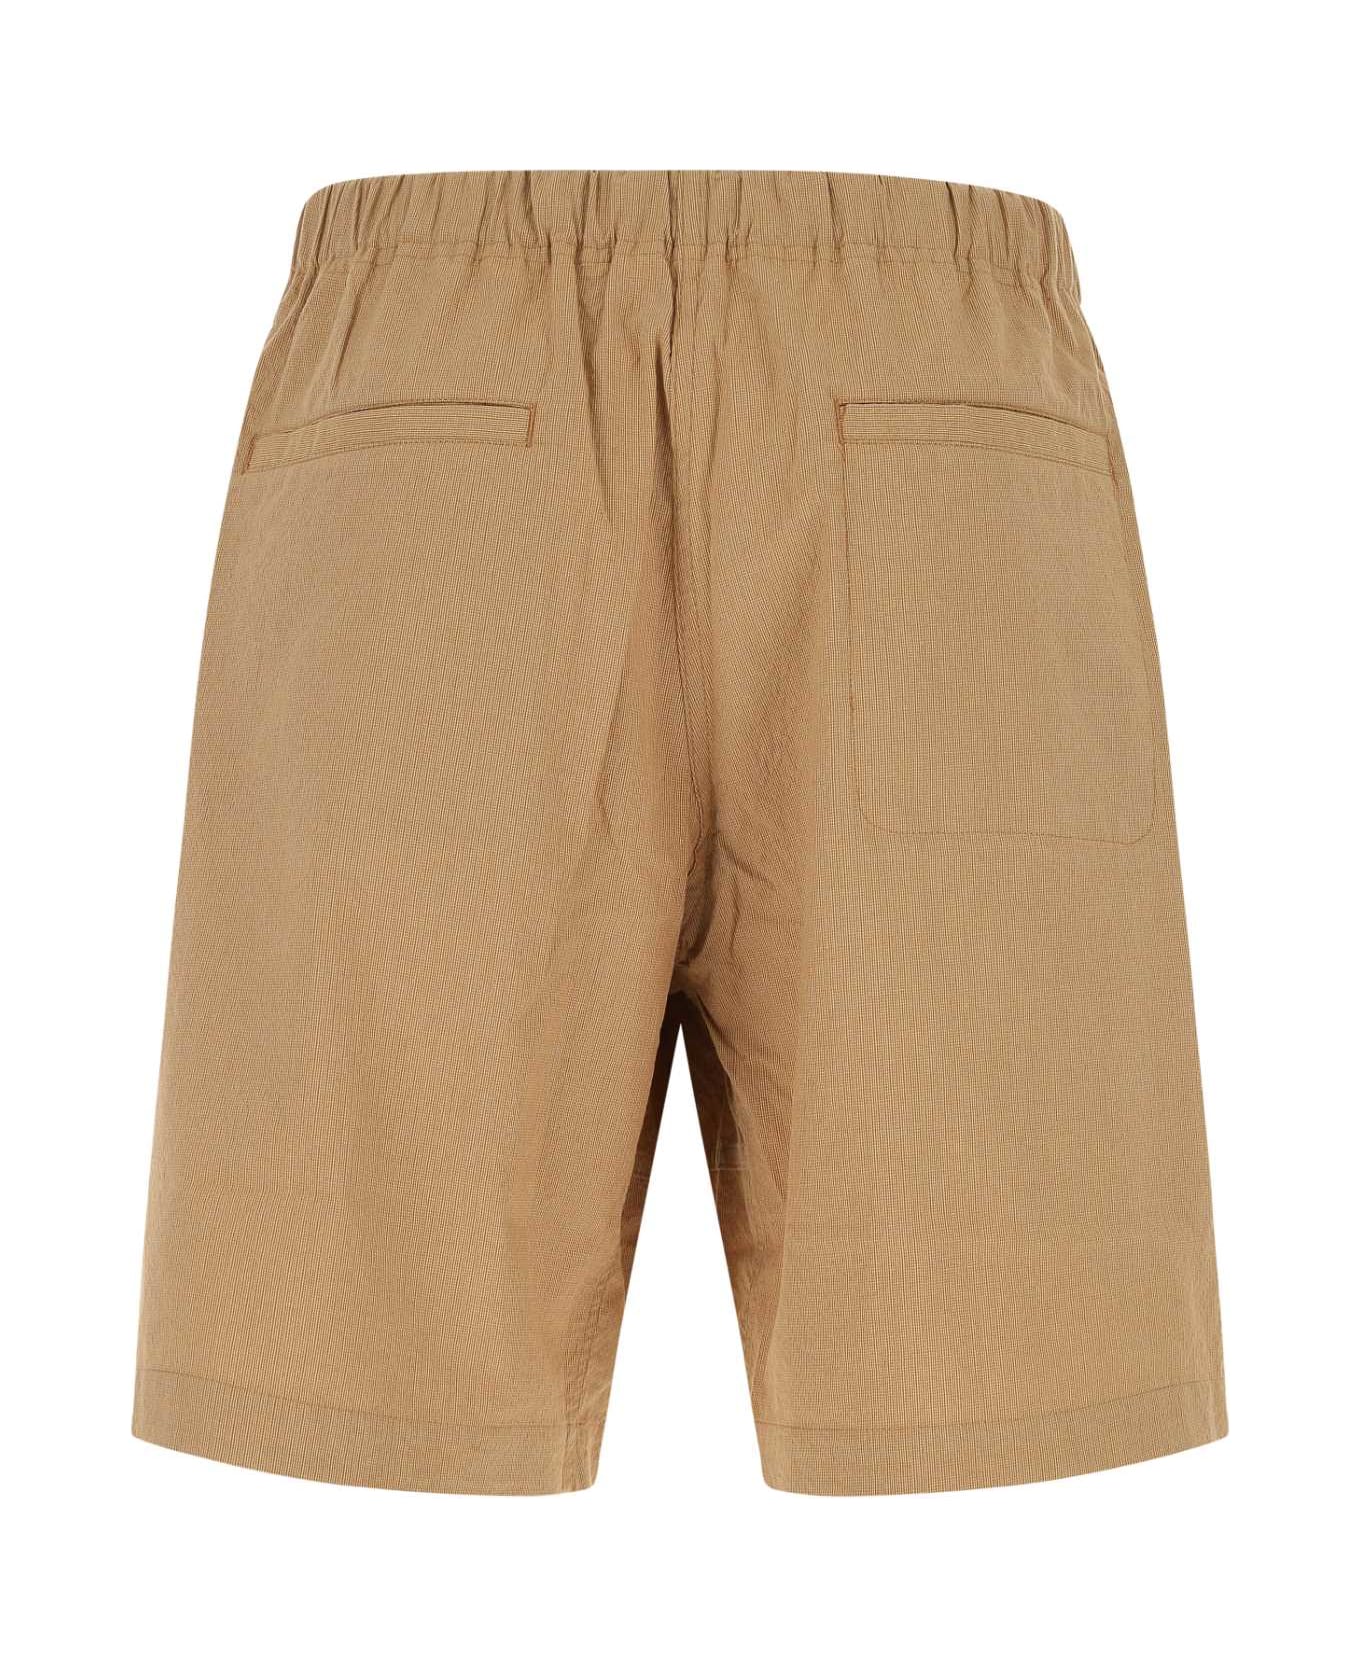 Kenzo Biscuit Cotton Bermuda Shorts - 42